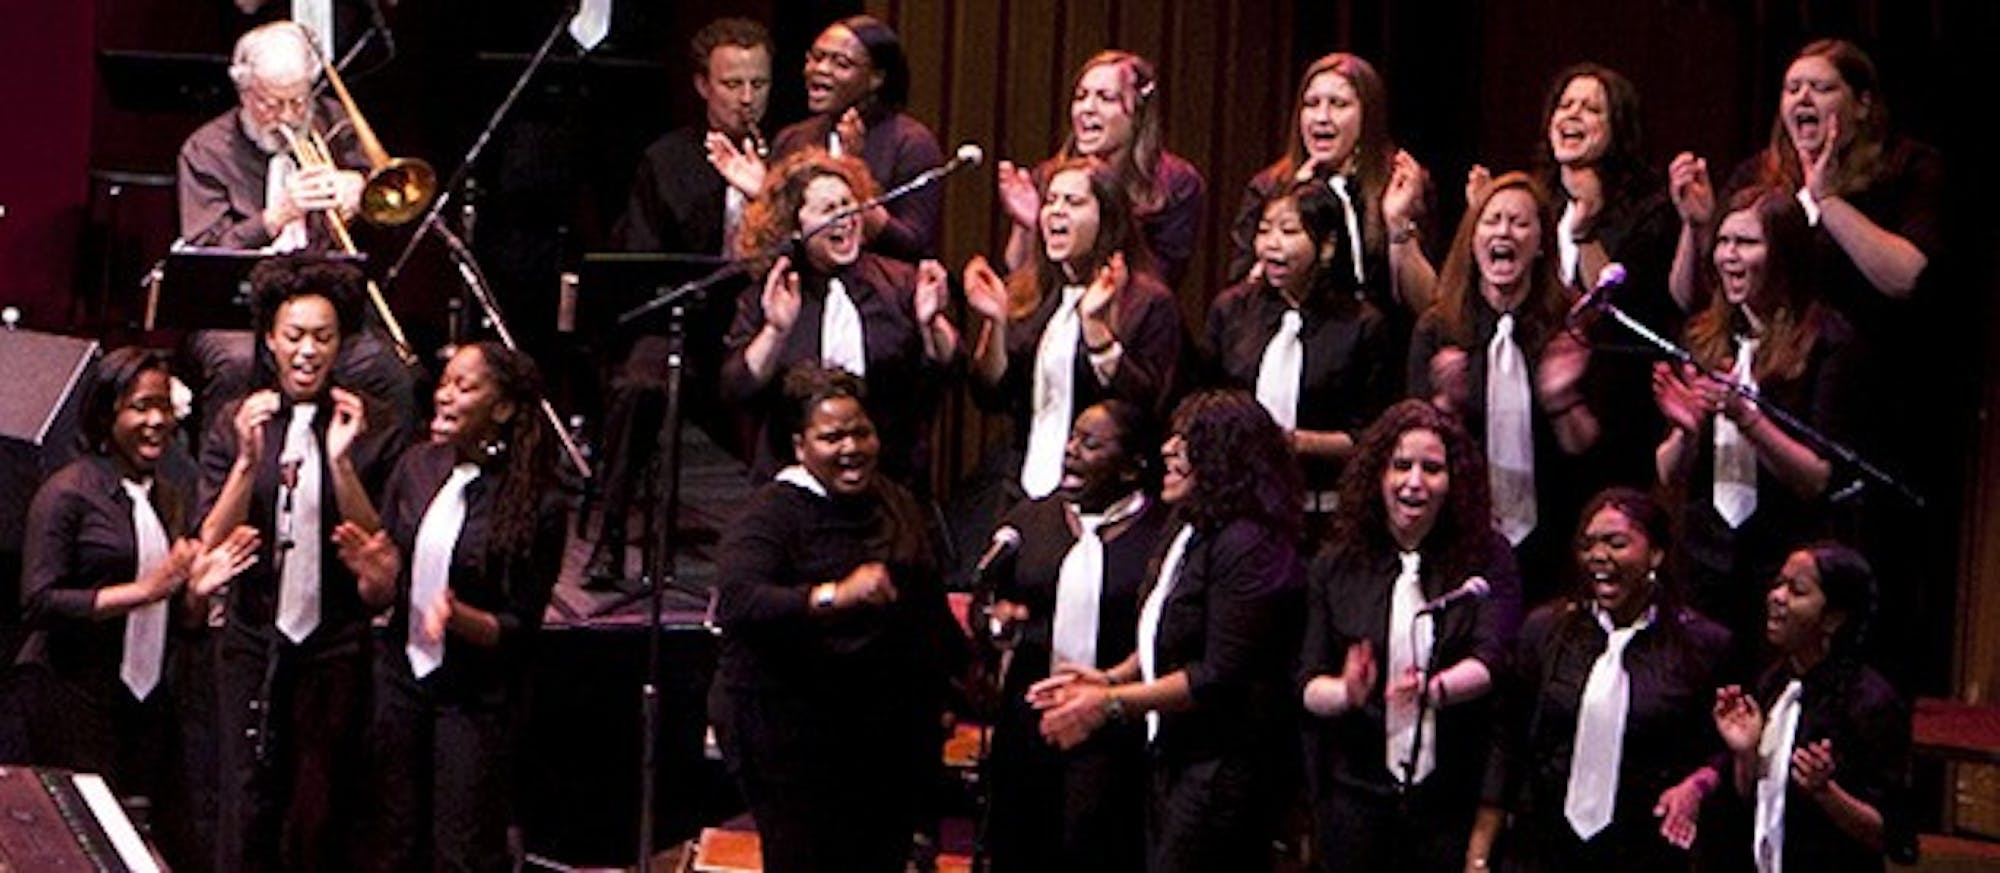 The Gospel Choir performed 